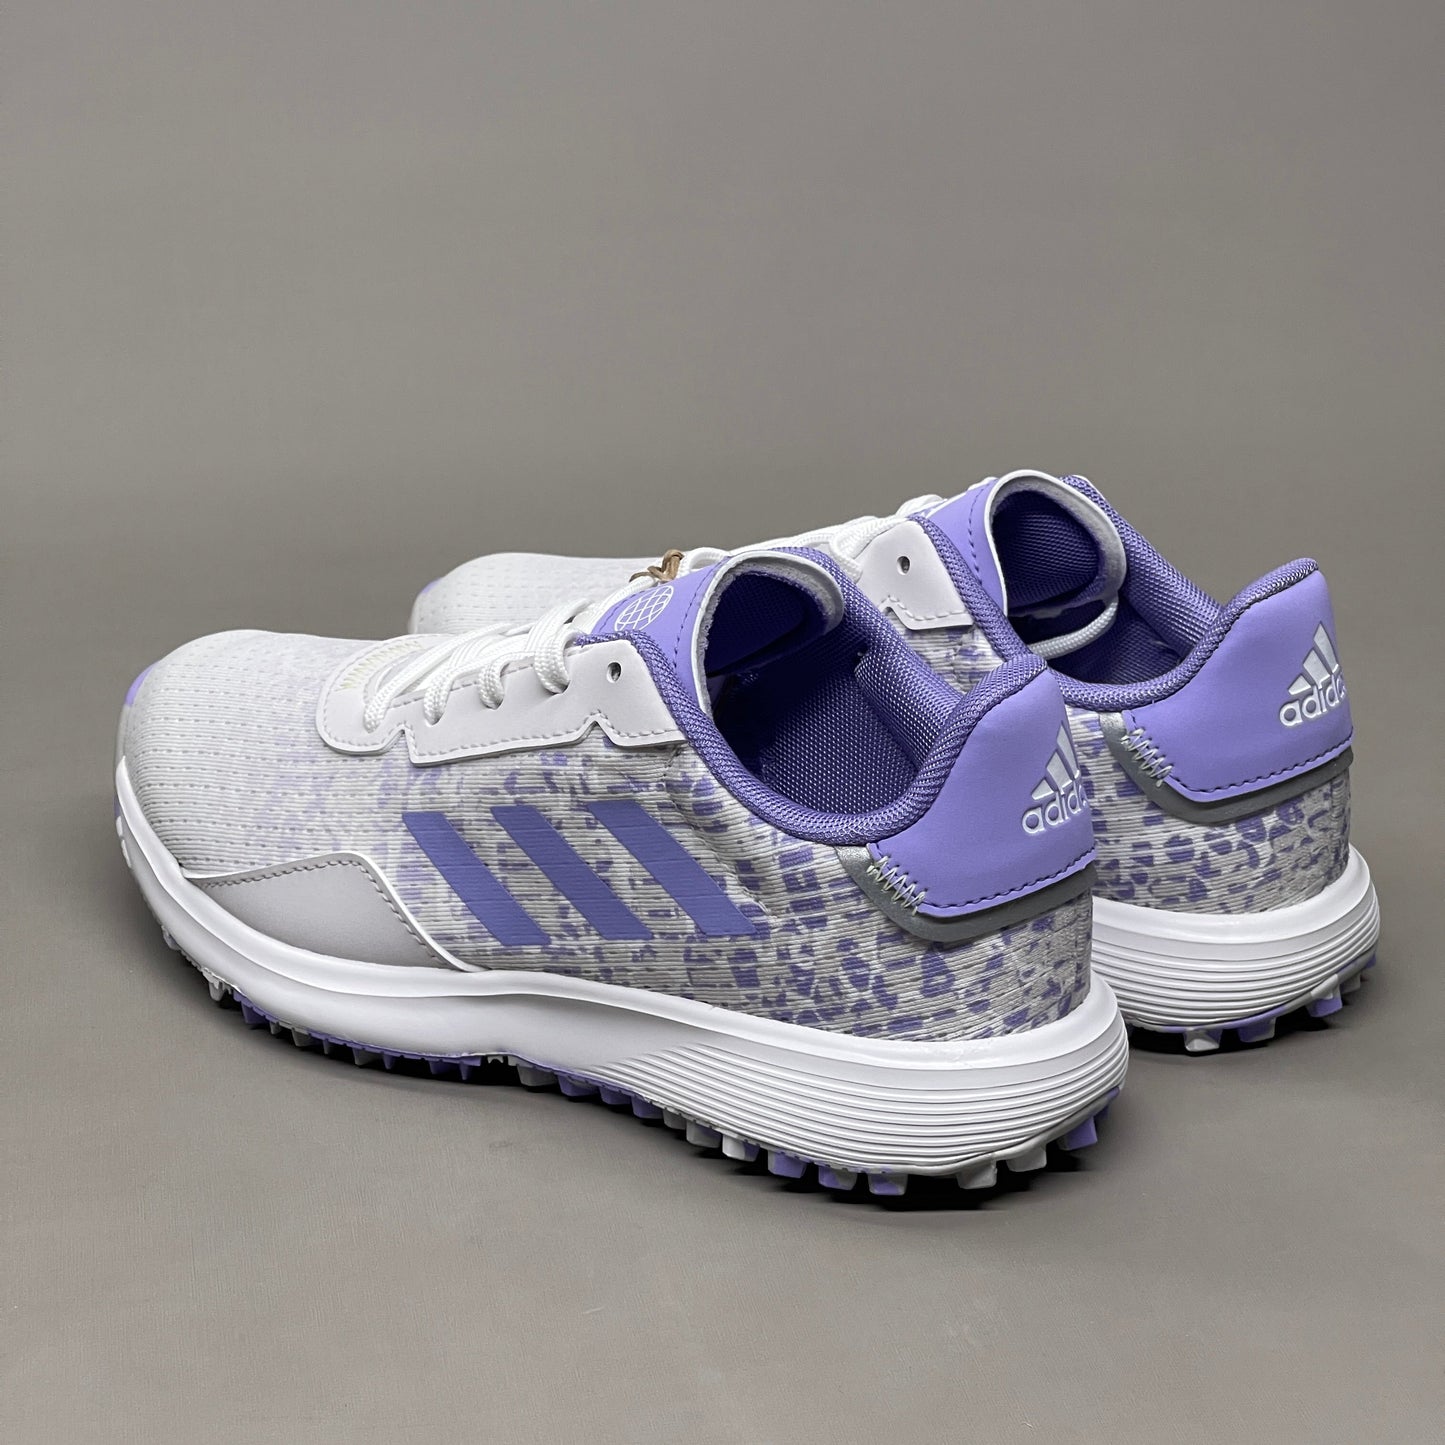 ADIDAS Golf Shoes JR S2G SL Waterproof Youth Sz 2.5 White / Lime / Purple GV9787 (New)